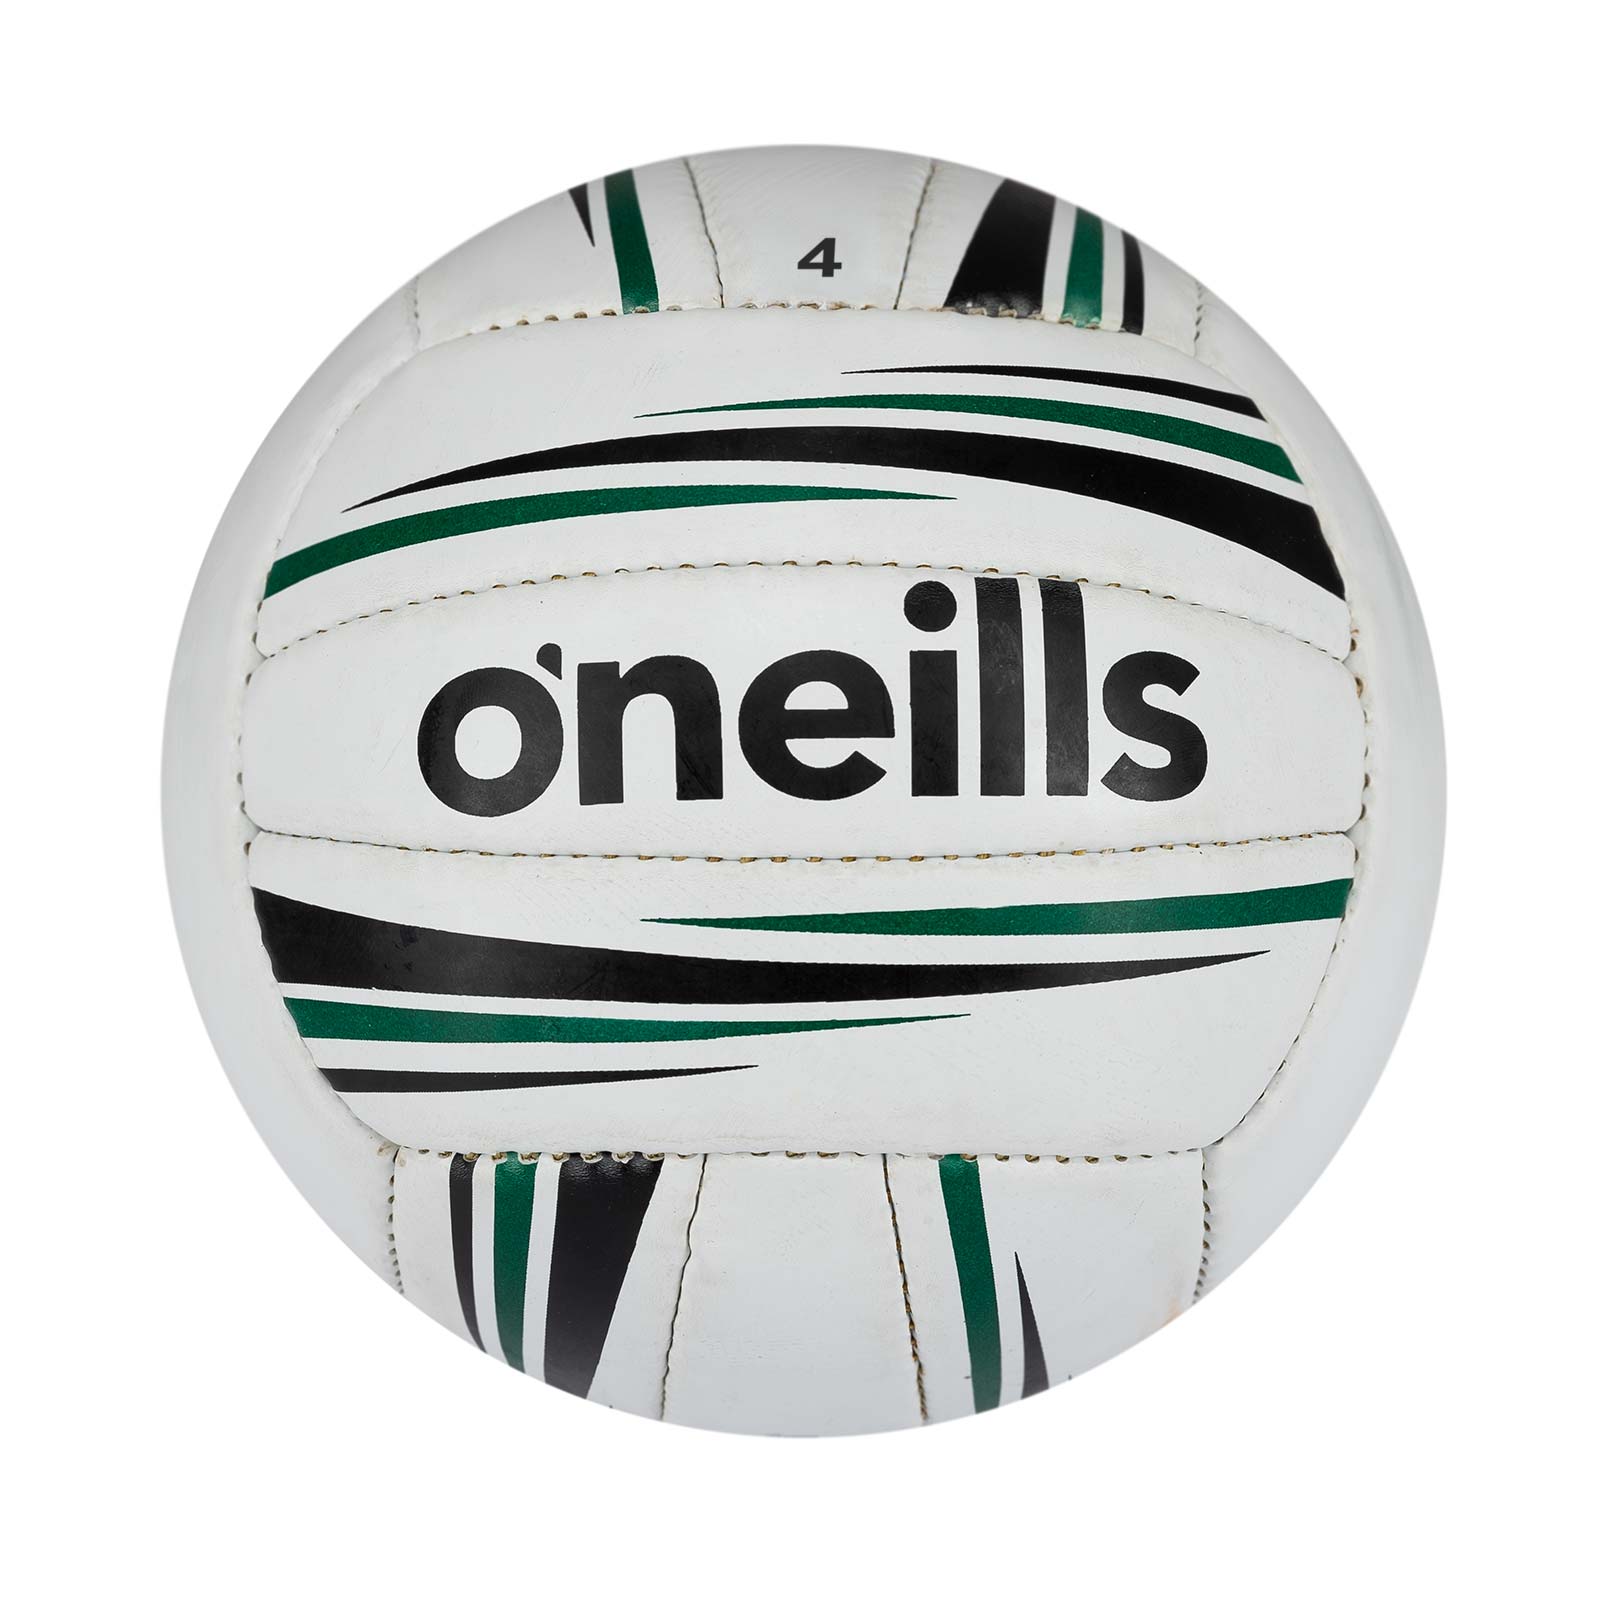 O'NEILLS INTER COUNTY GAA TRAINER FOOTBALL - SIZE 4